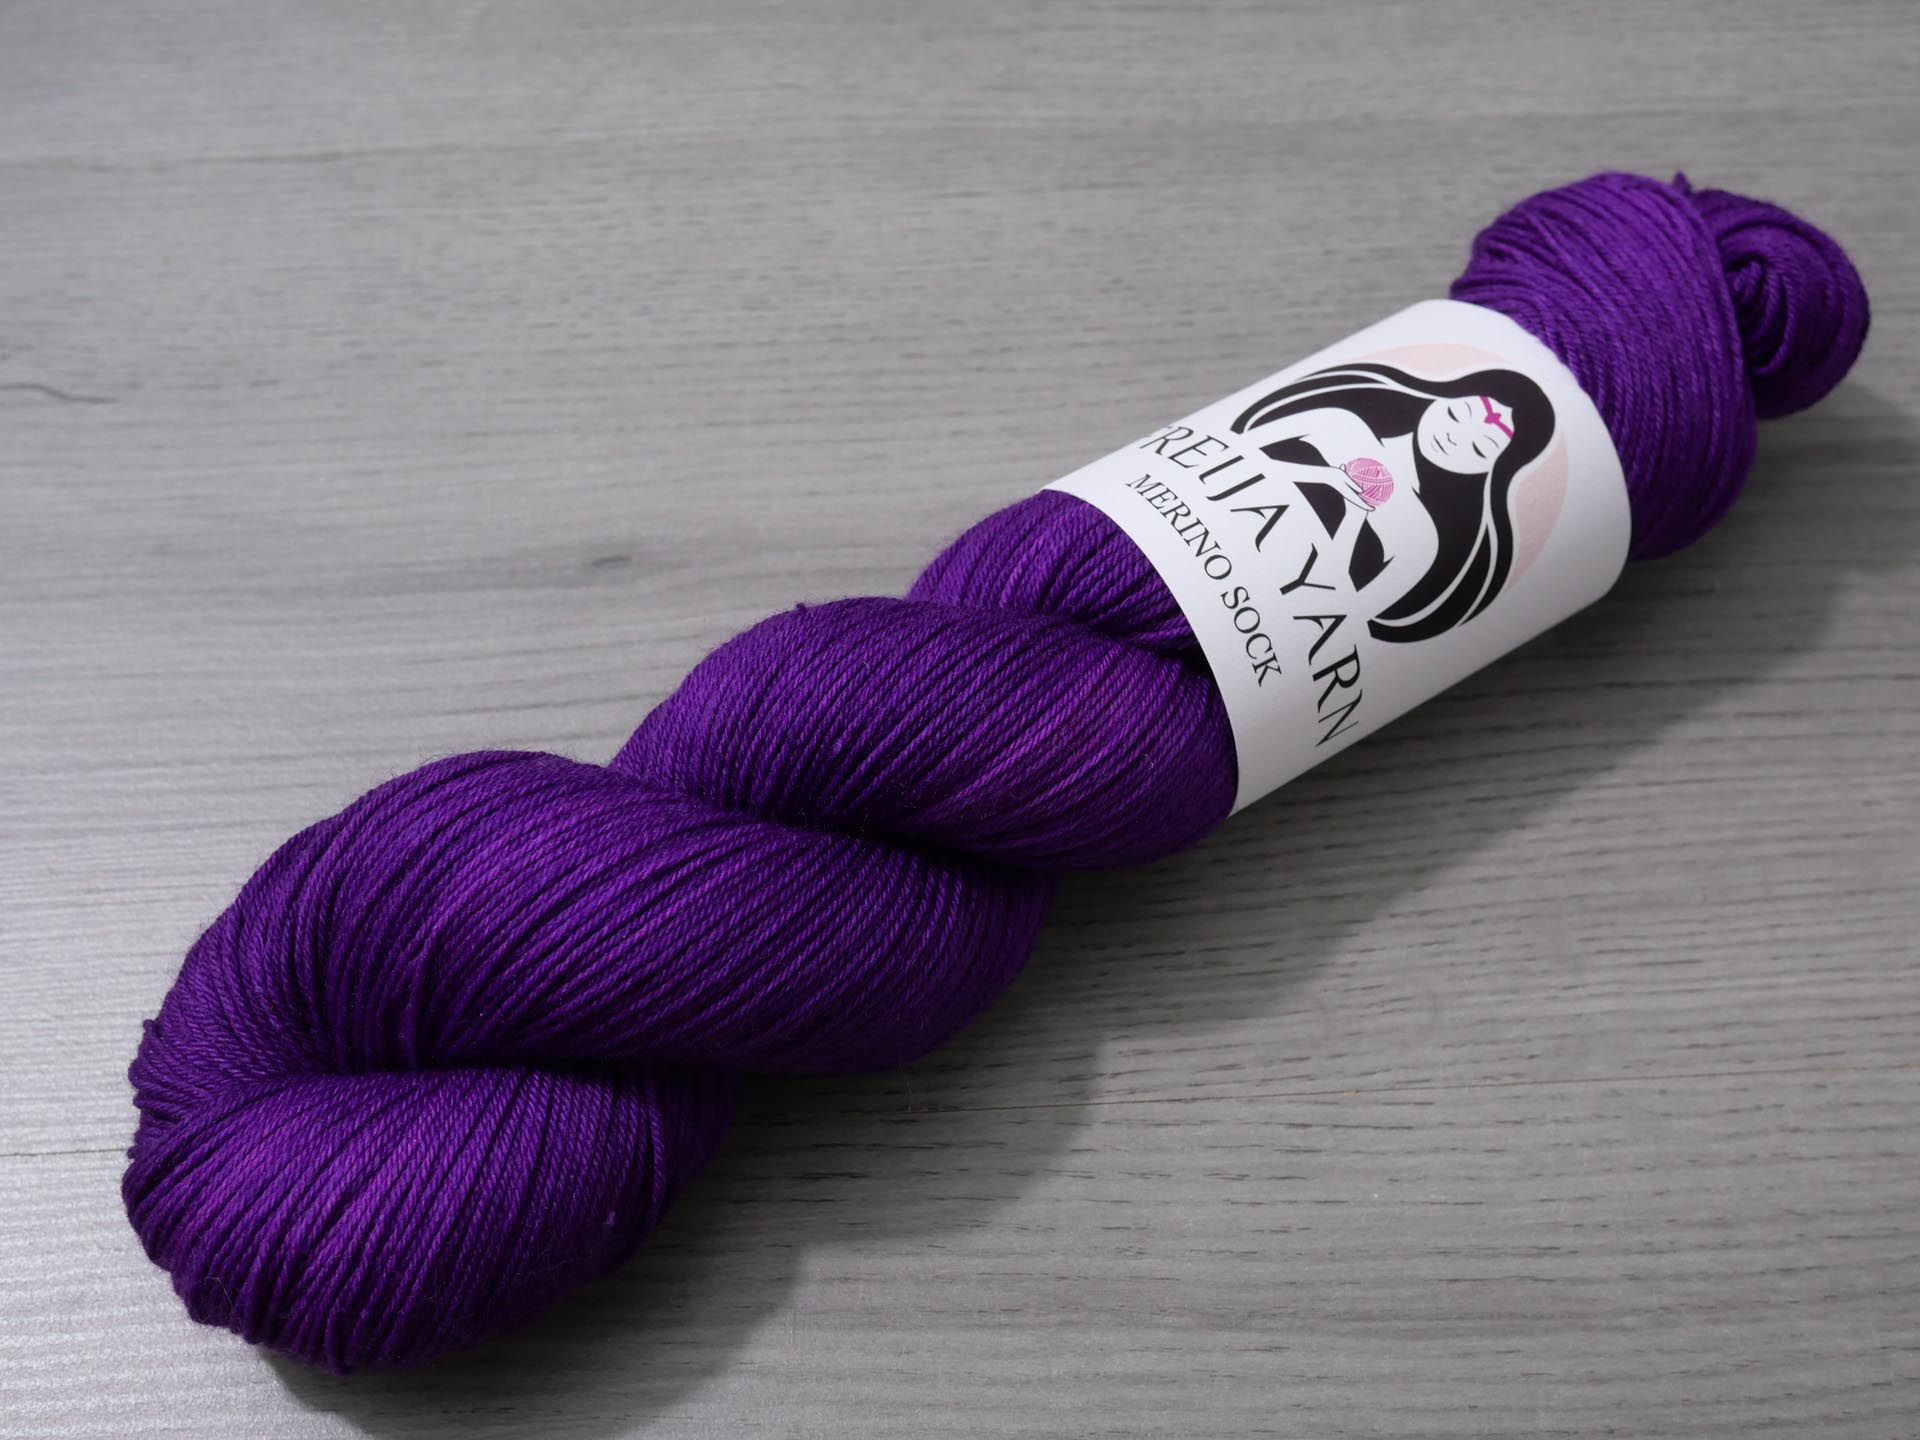 Mythical_purple_lanka_merino_sock